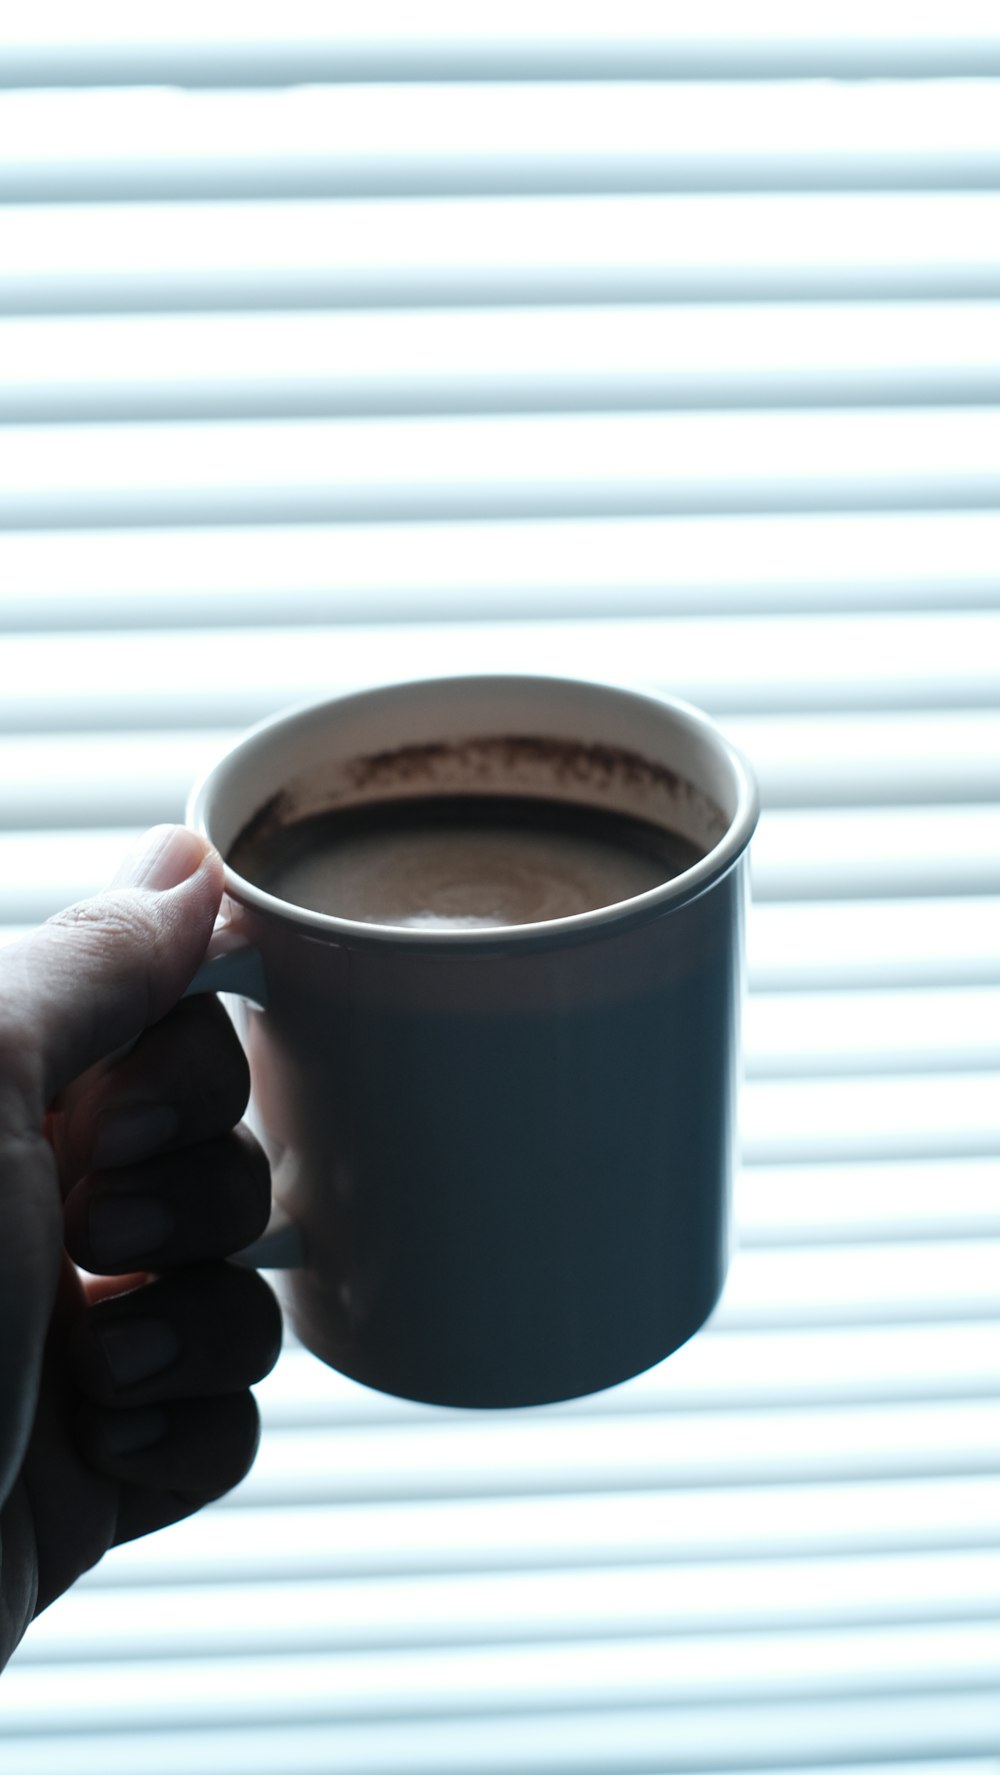 person holding black ceramic mug with brown liquid